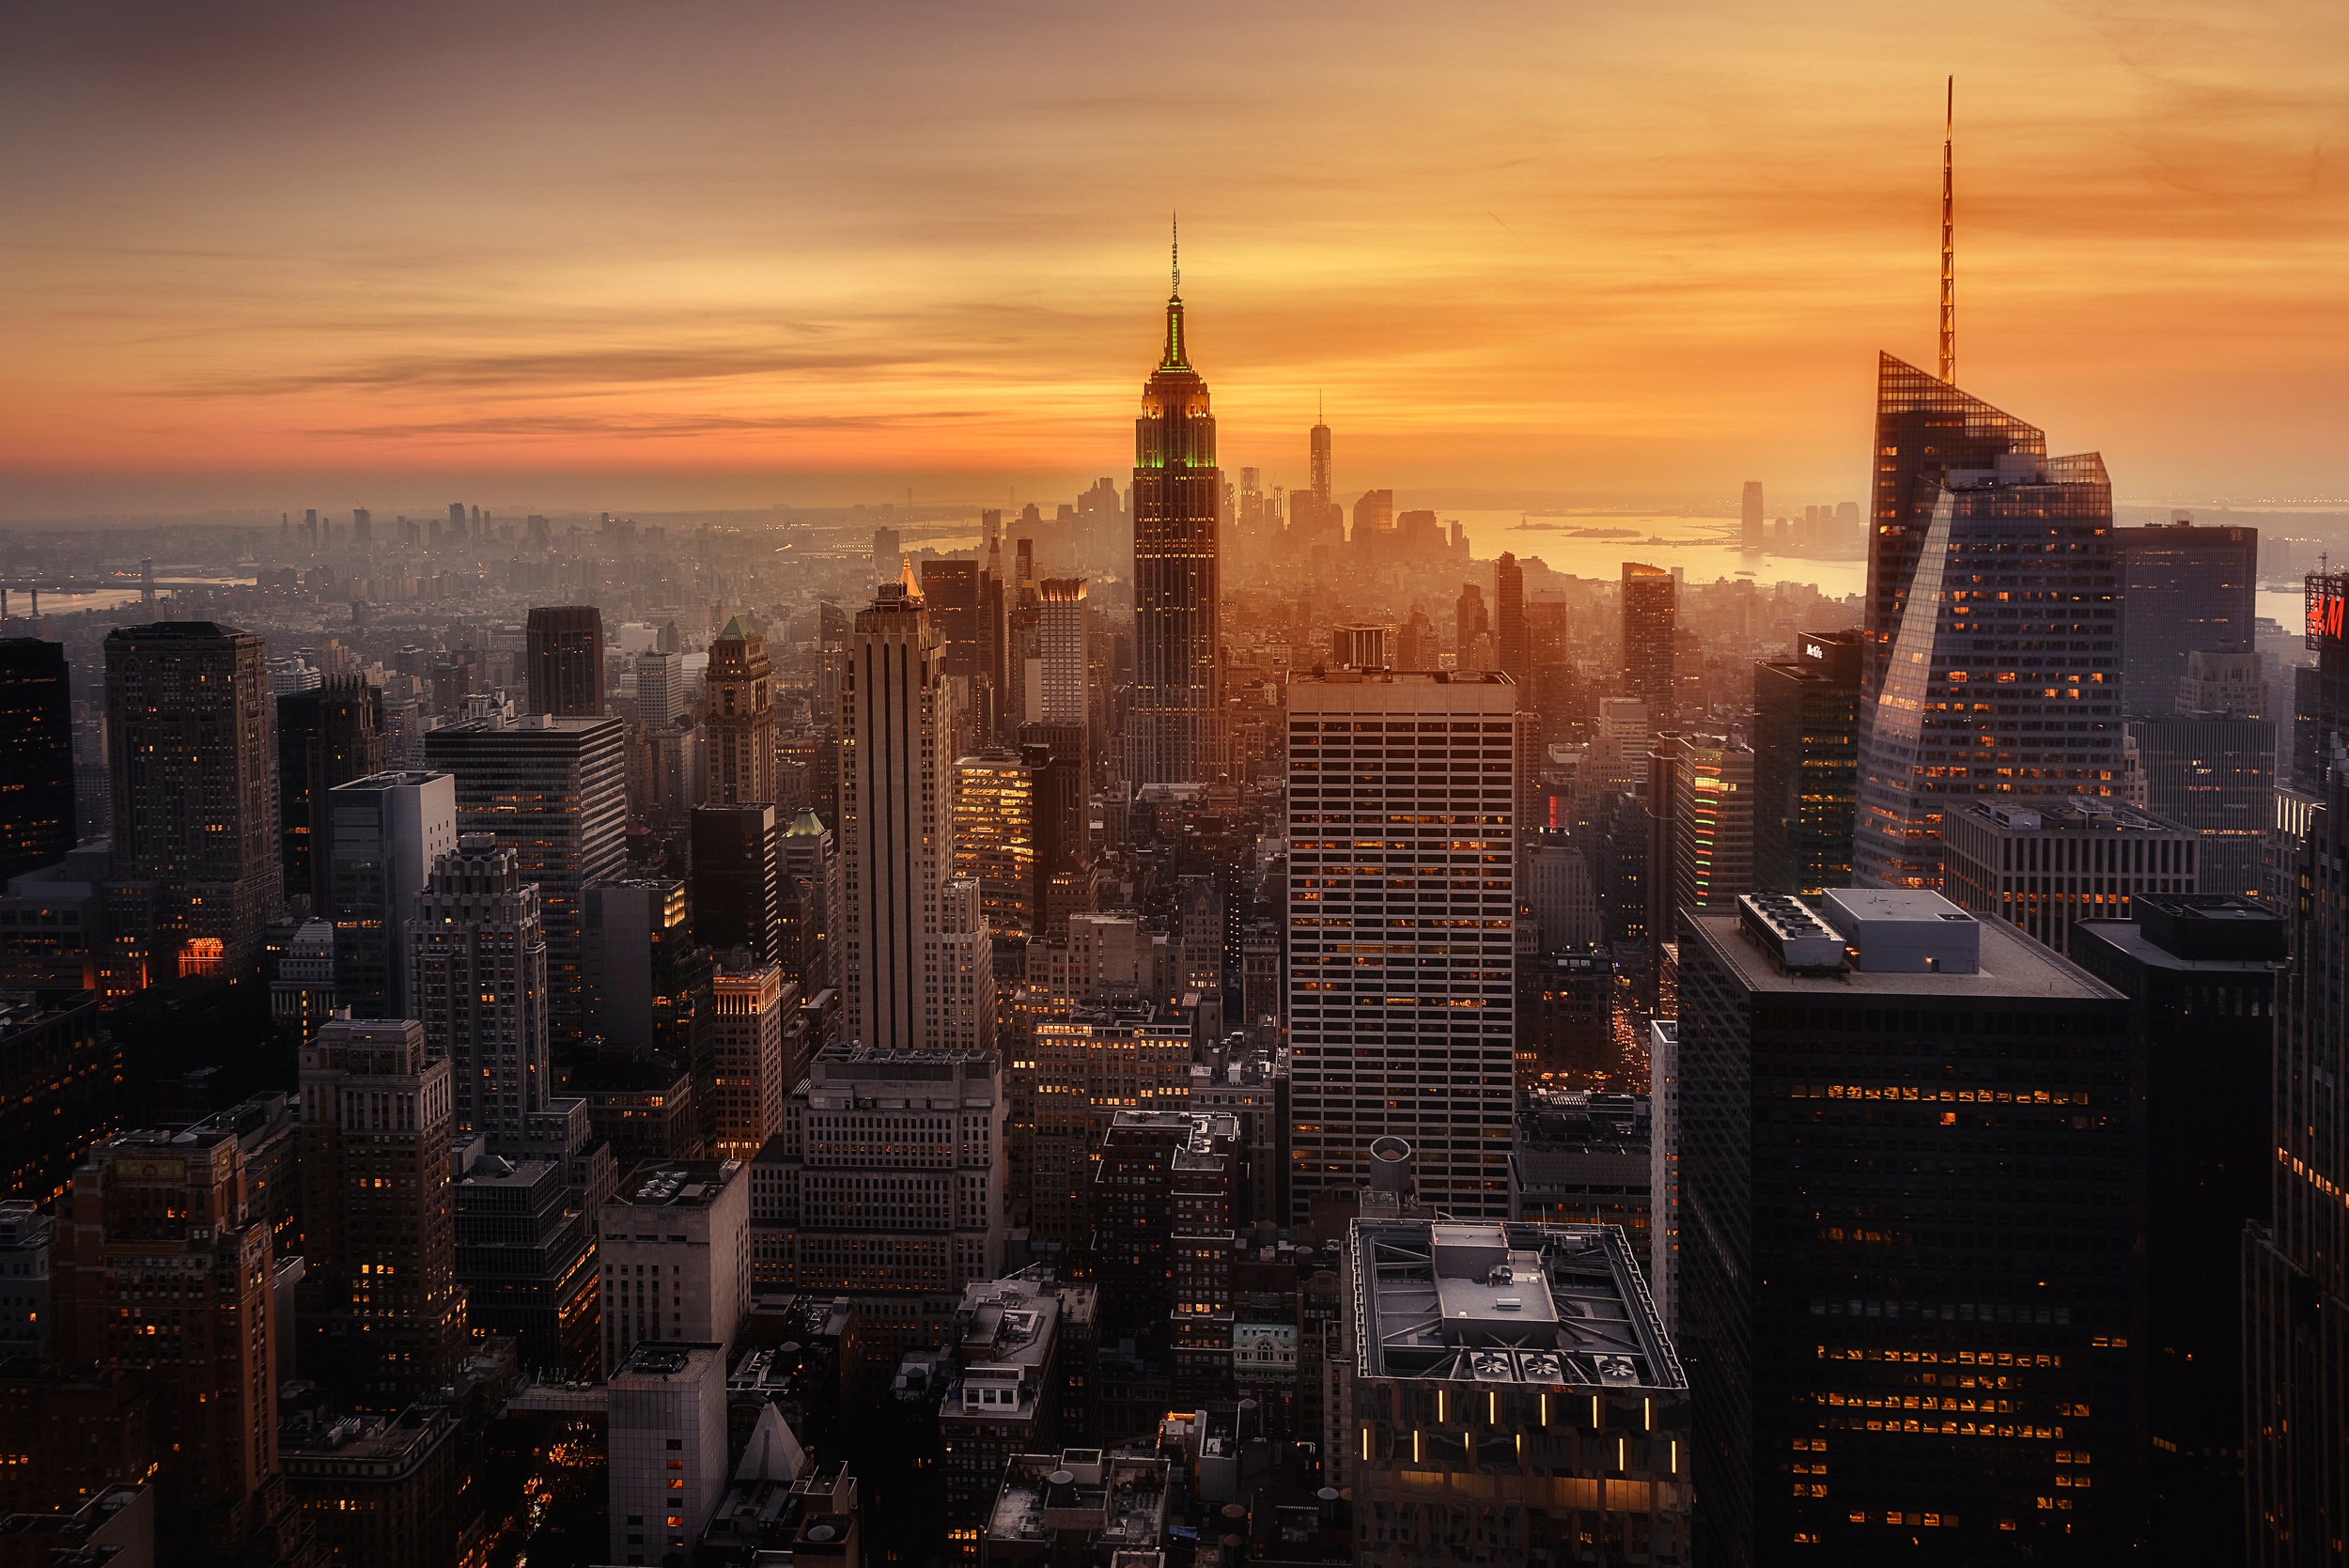 USA New York City Building Skyscraper Empire State Building Cityscape Sunset 2500x1669